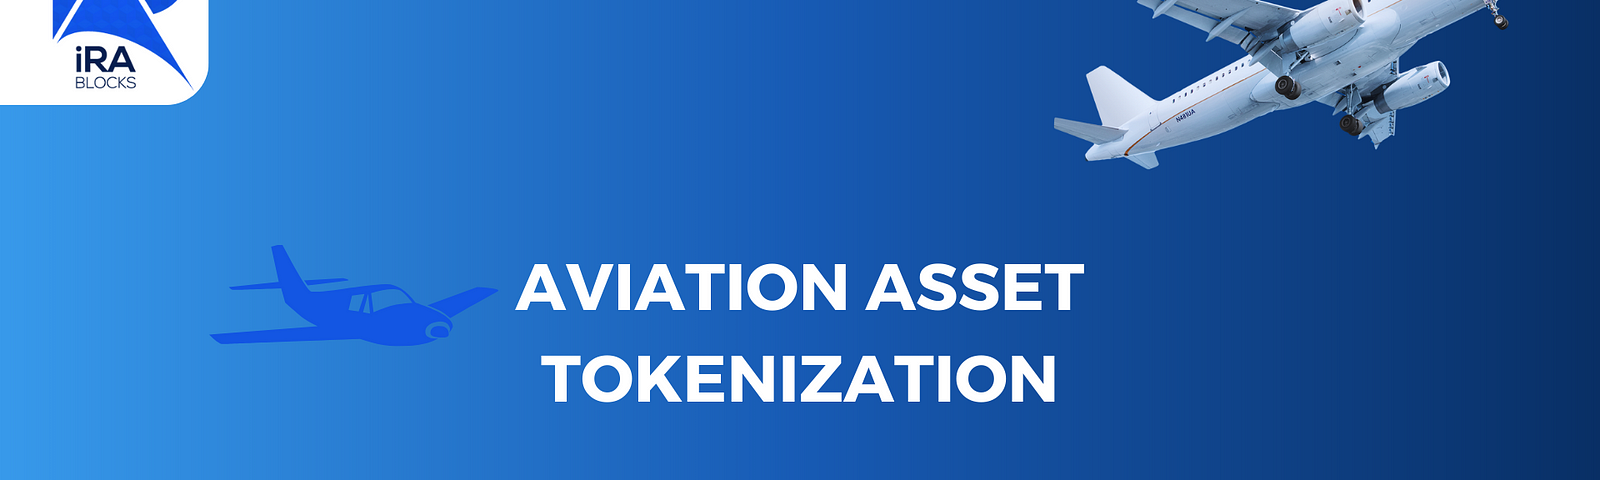 aviation asset tokenization ira blocks